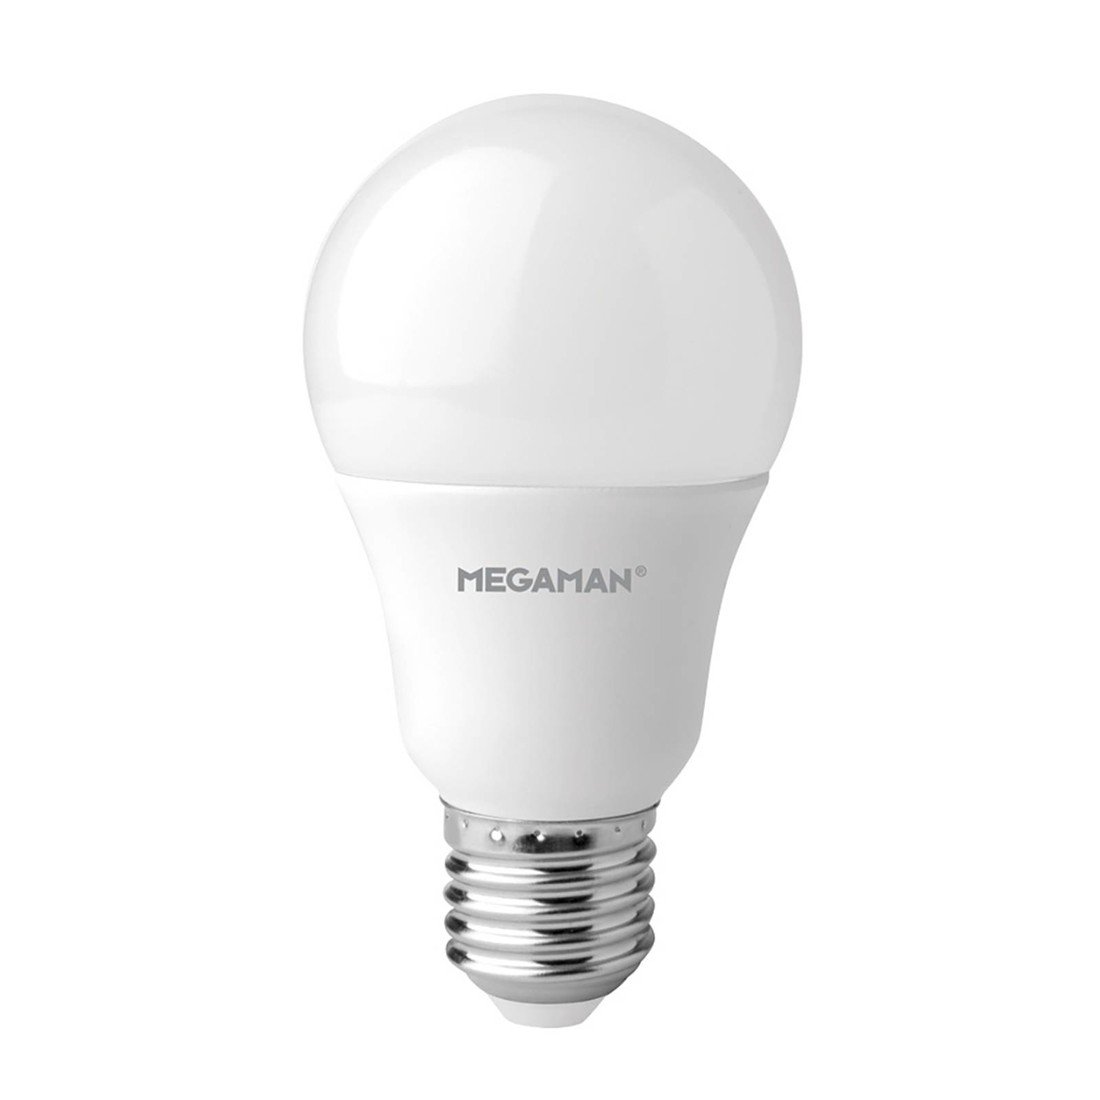 Megaman MEGAMAN E27 7W LED žárovka A60 810 lm 4 000 K opál, plast, E27, 7W, Energetická třída: E, P: 10.9 cm